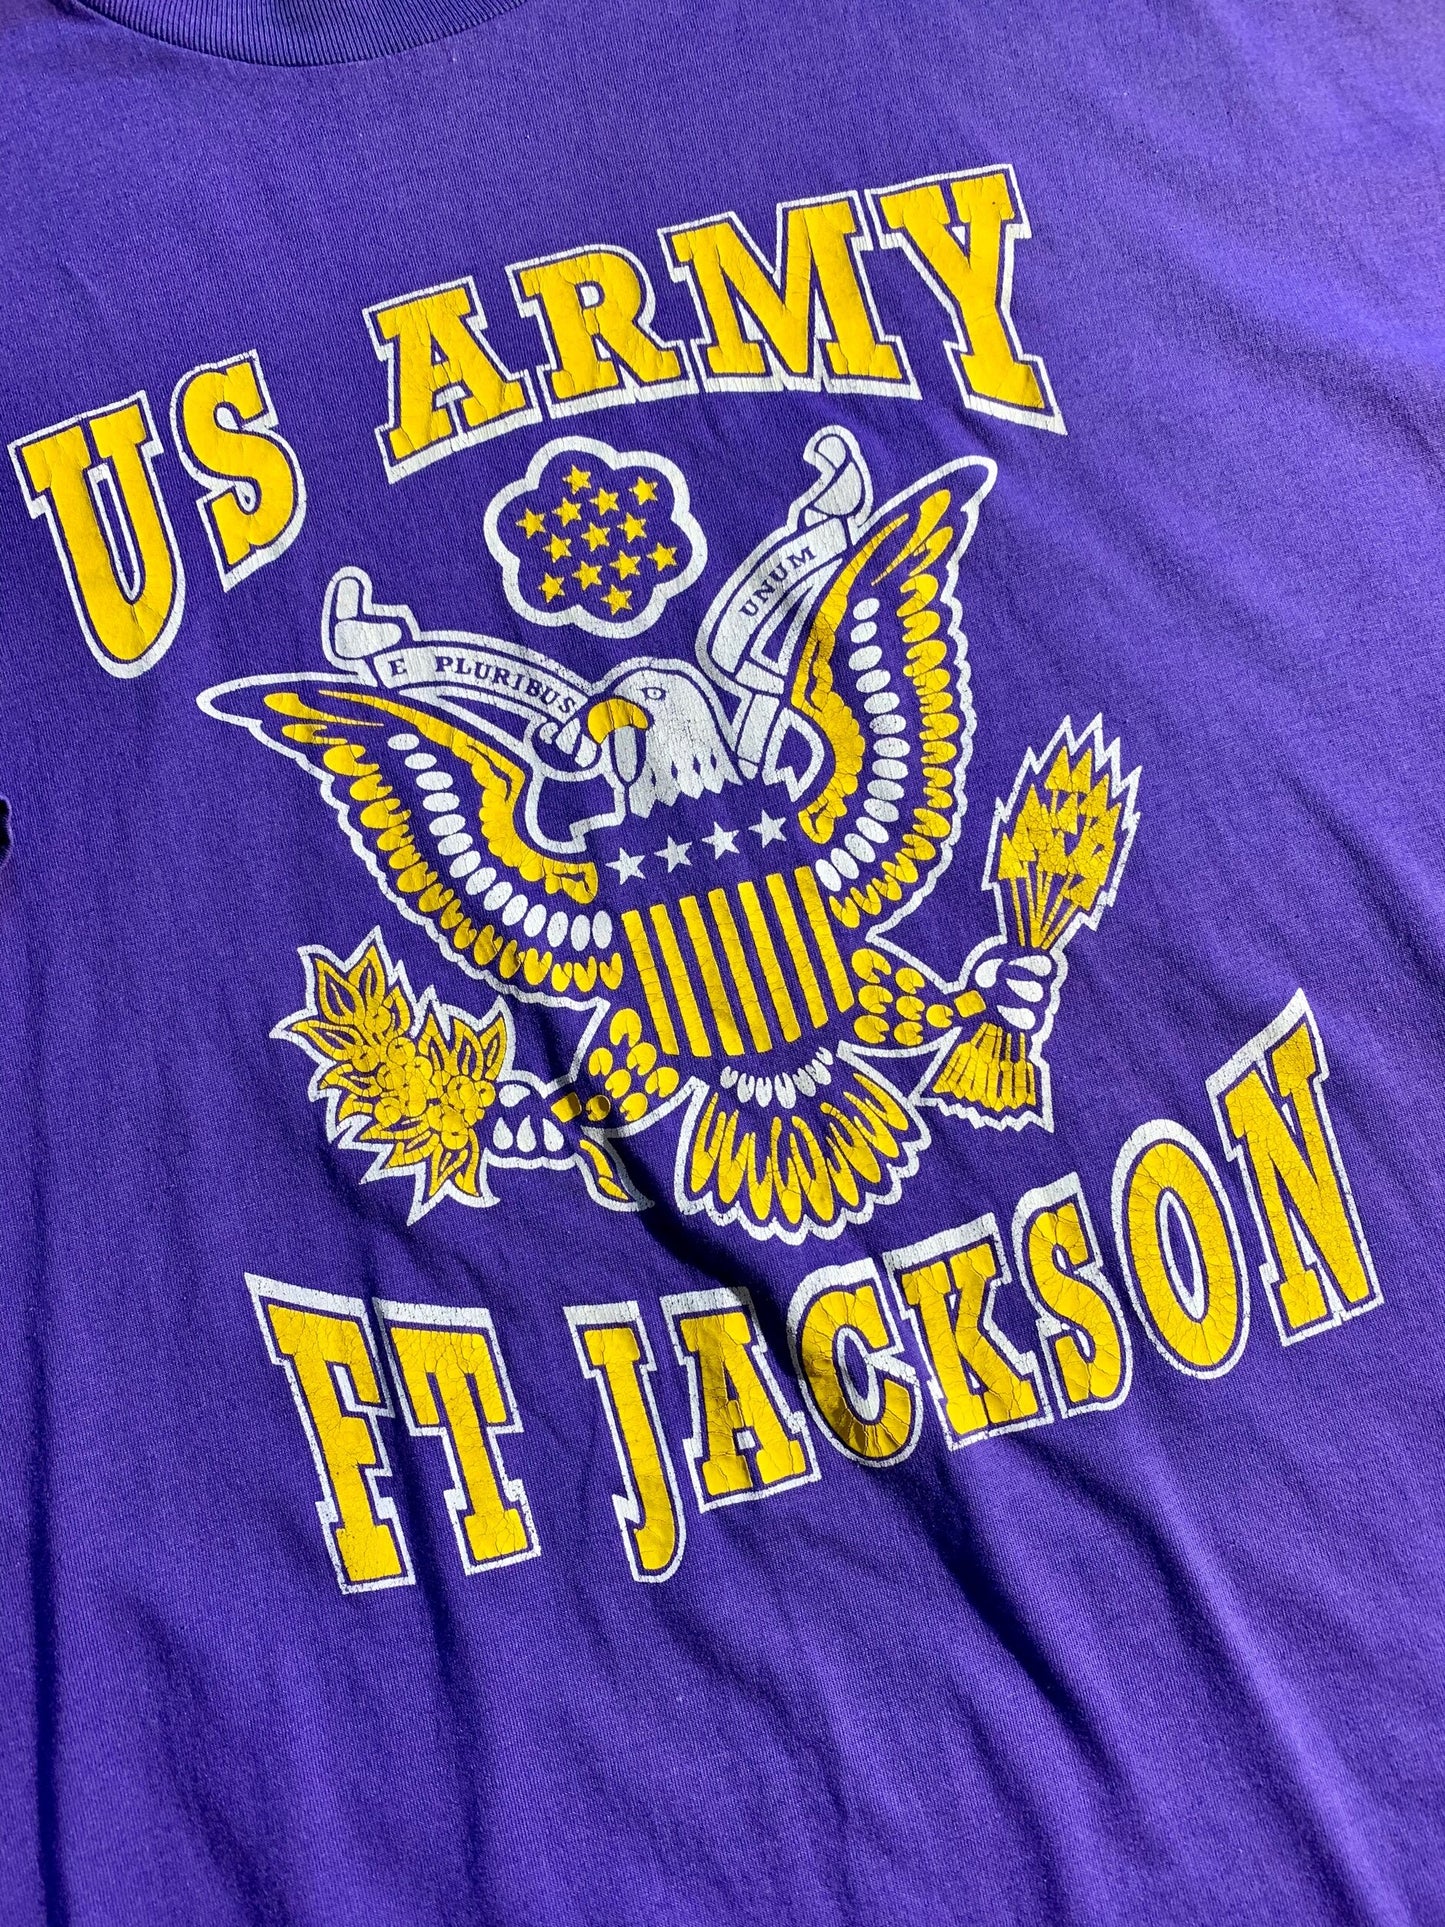 Vintage US Army Ft Jackson T-Shirt